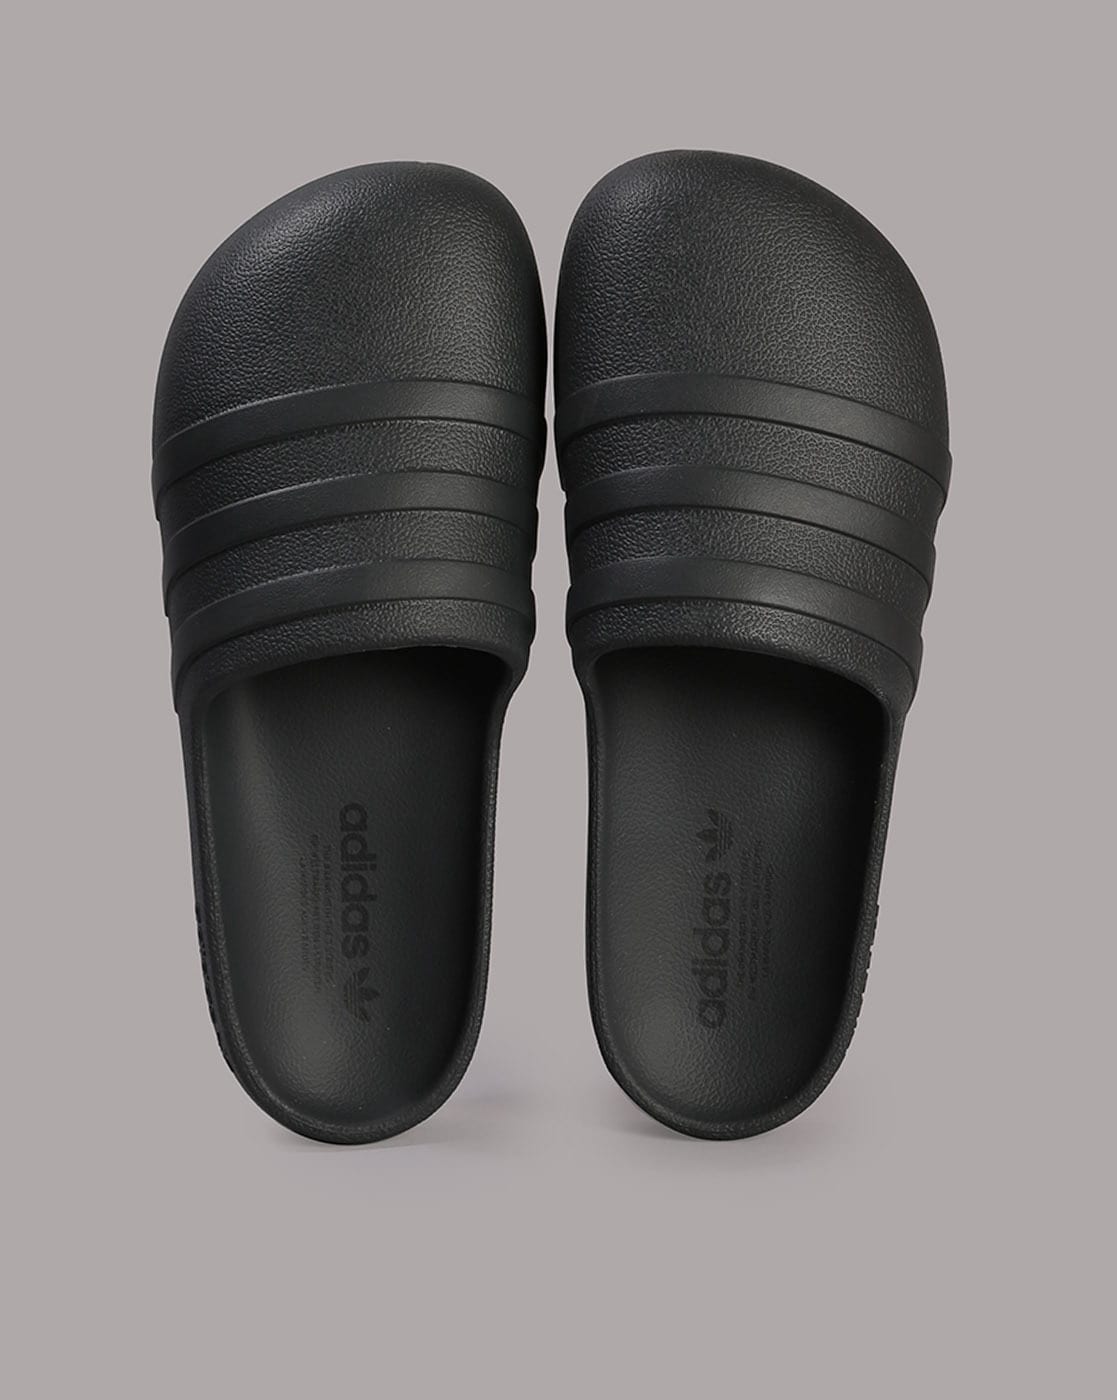 Explore 205+ adidas slippers for men